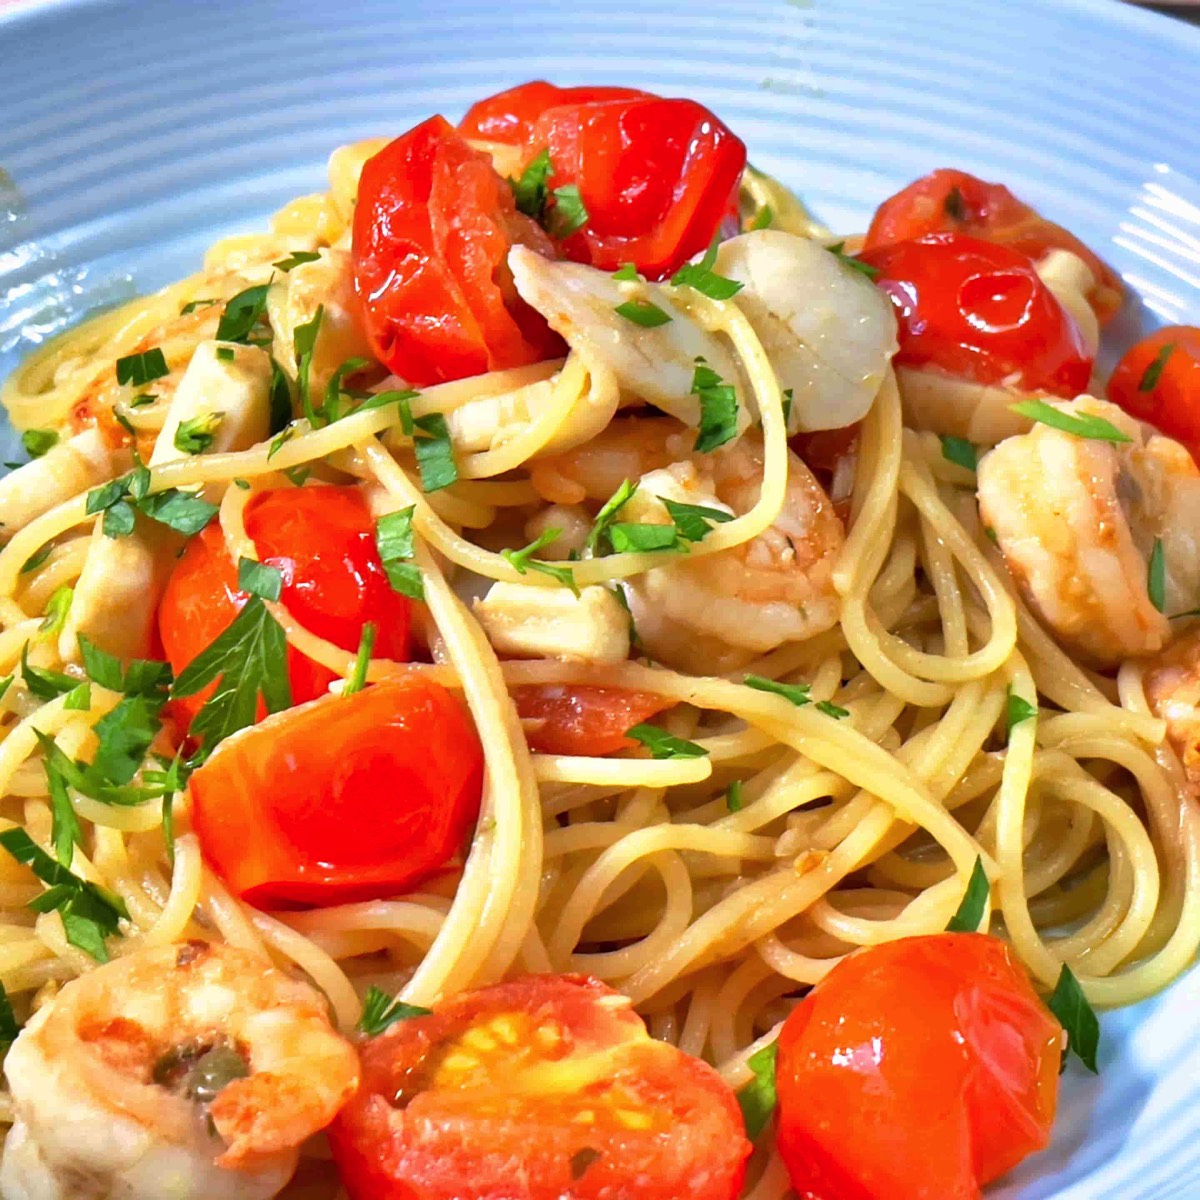 Piacere Cucinare: Simple recipes that's a pleasure to cook - squid